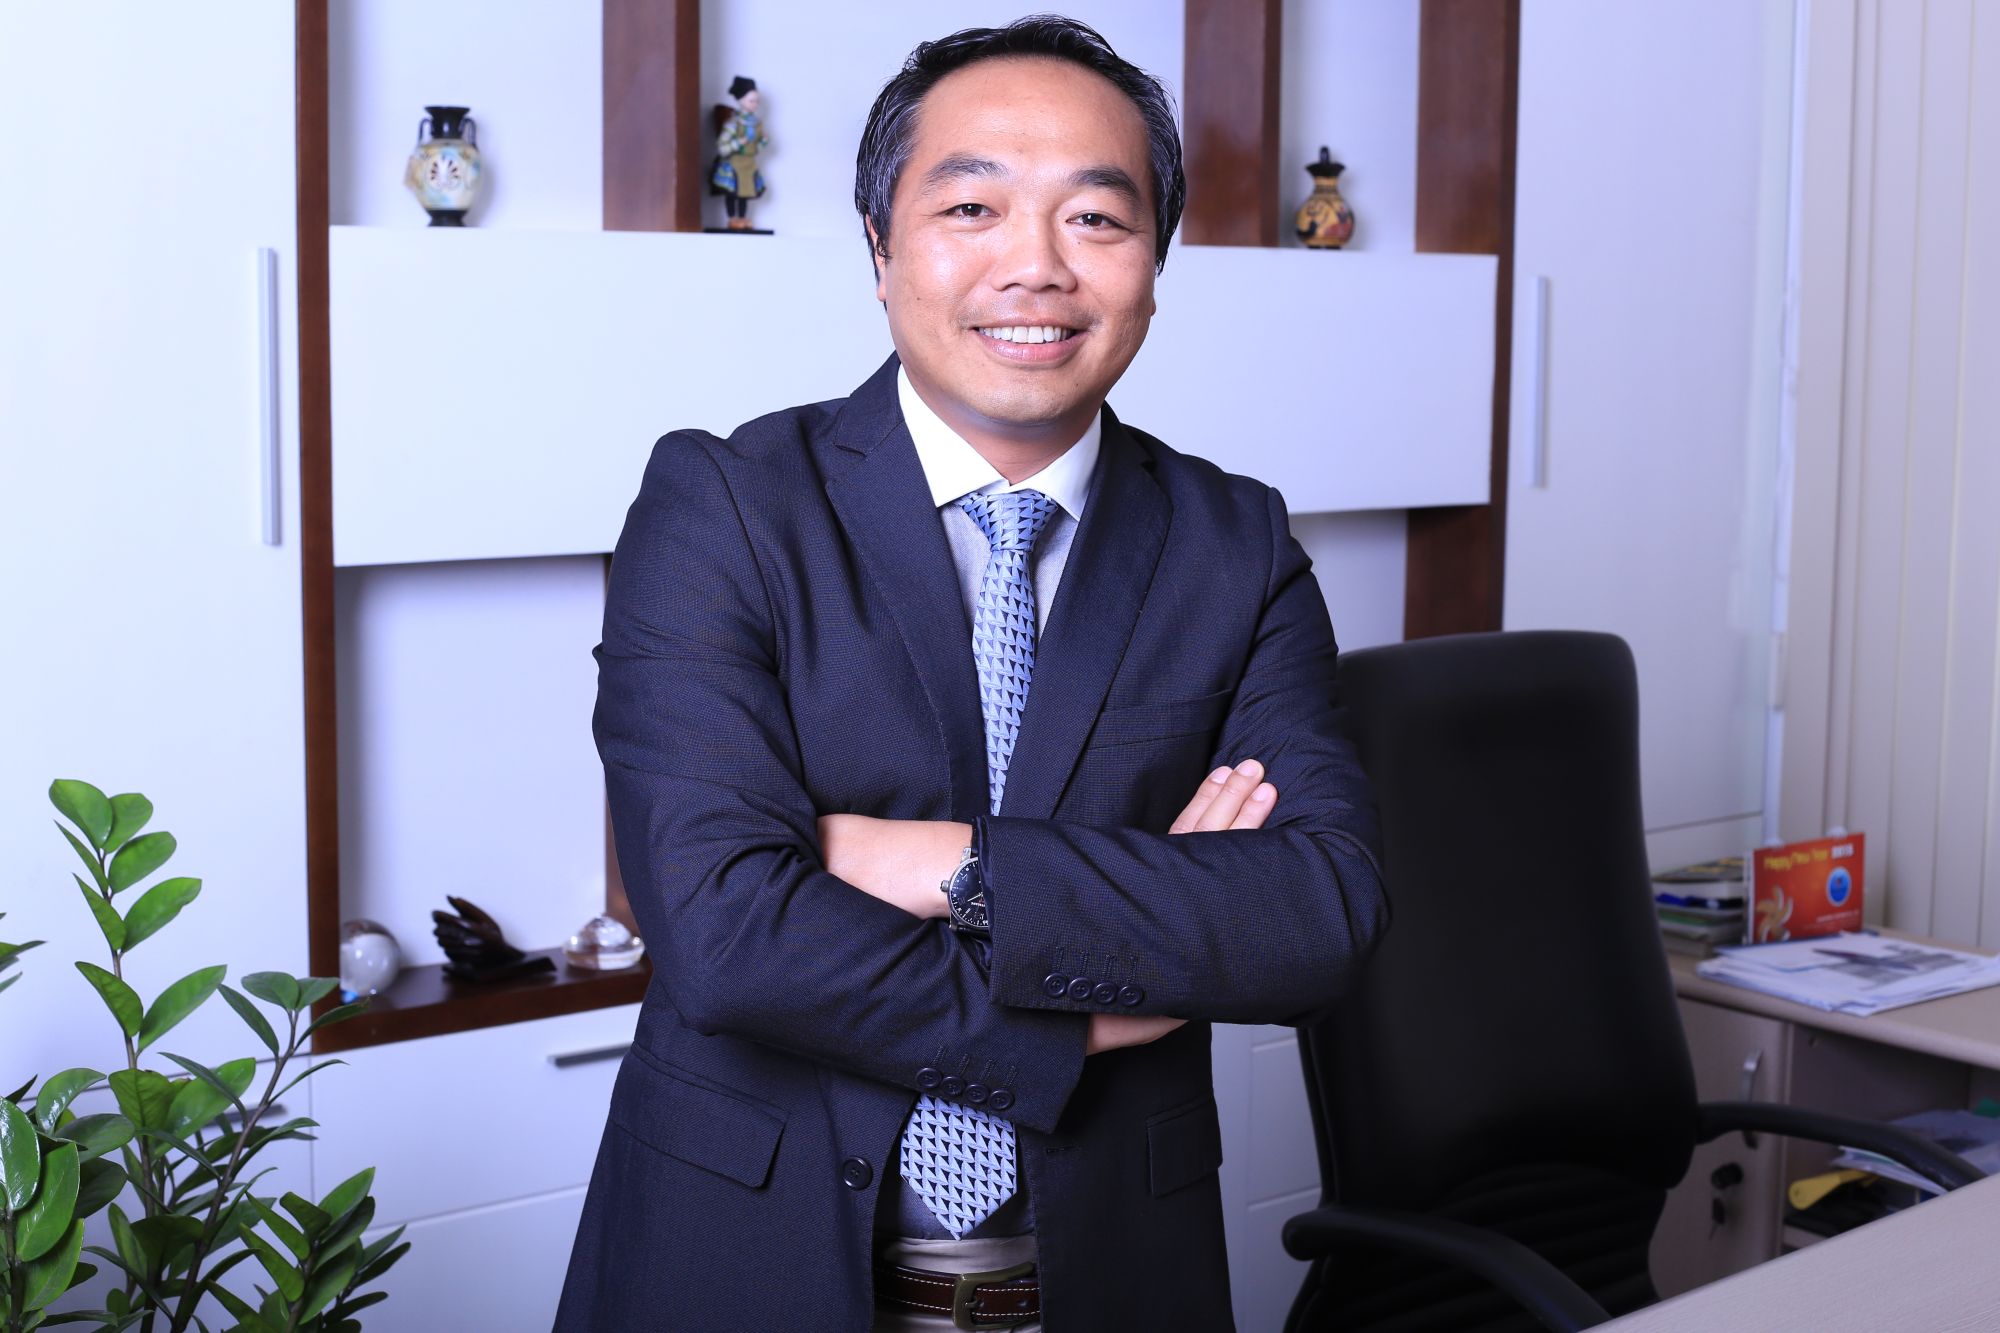 hinh 1- Tran Thanh Nam - CEO of ASIA DMC